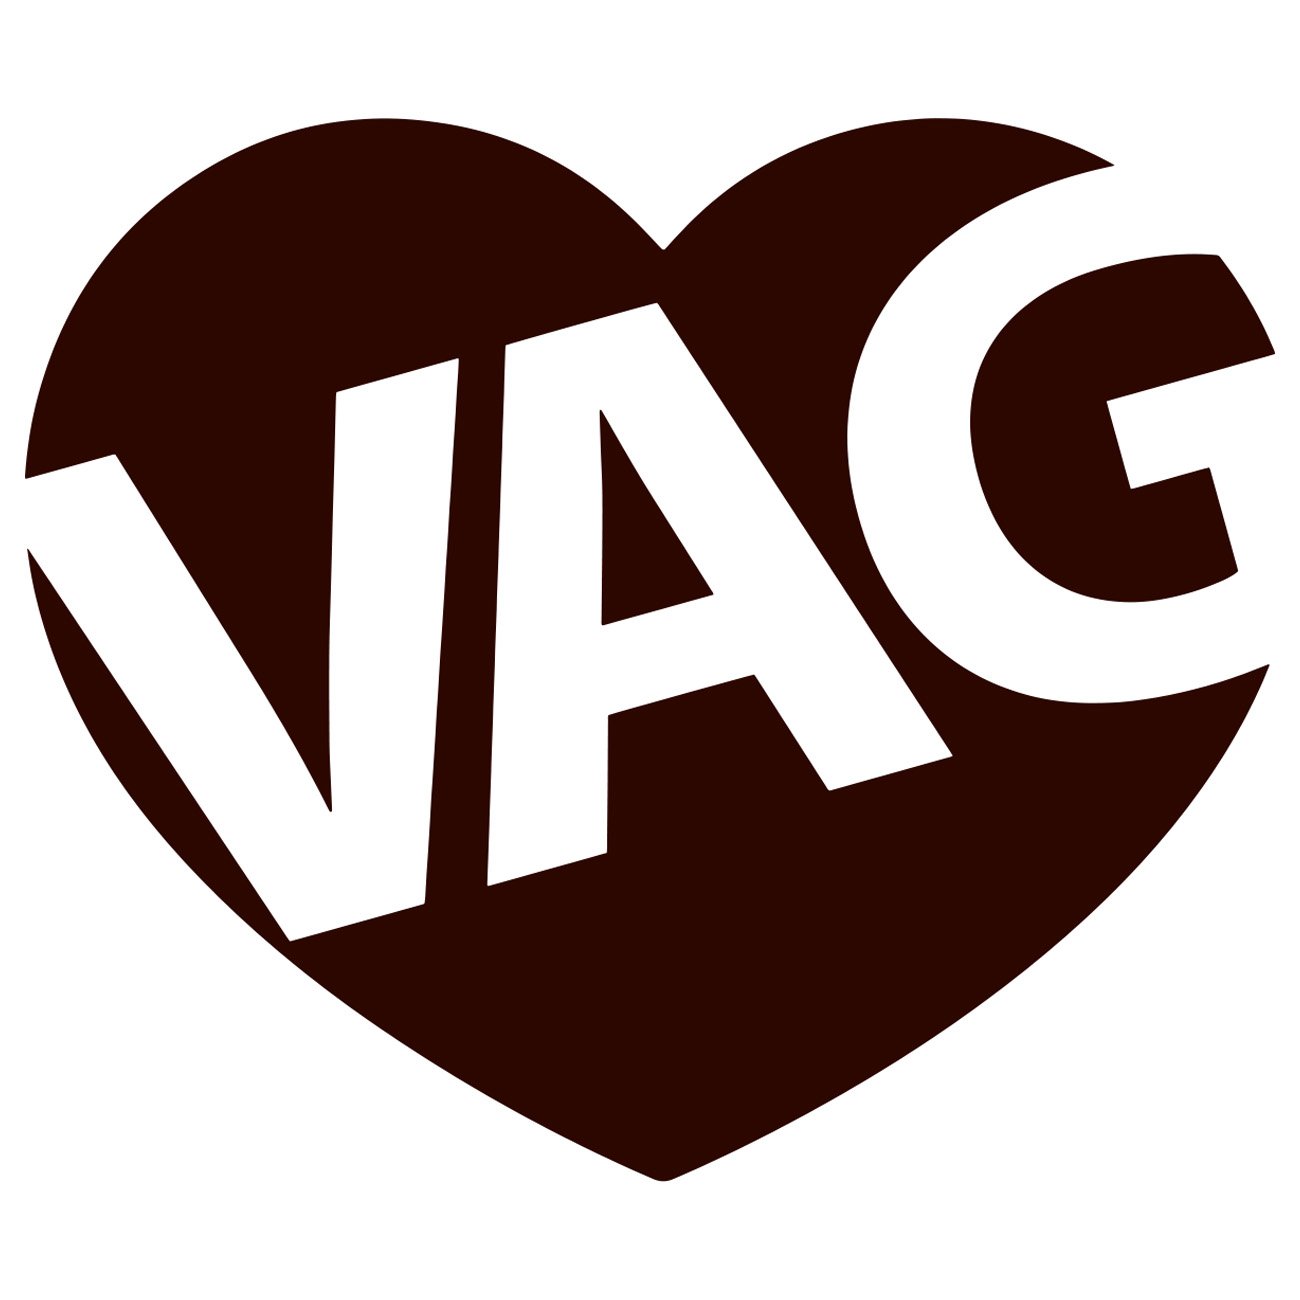 VAG heart